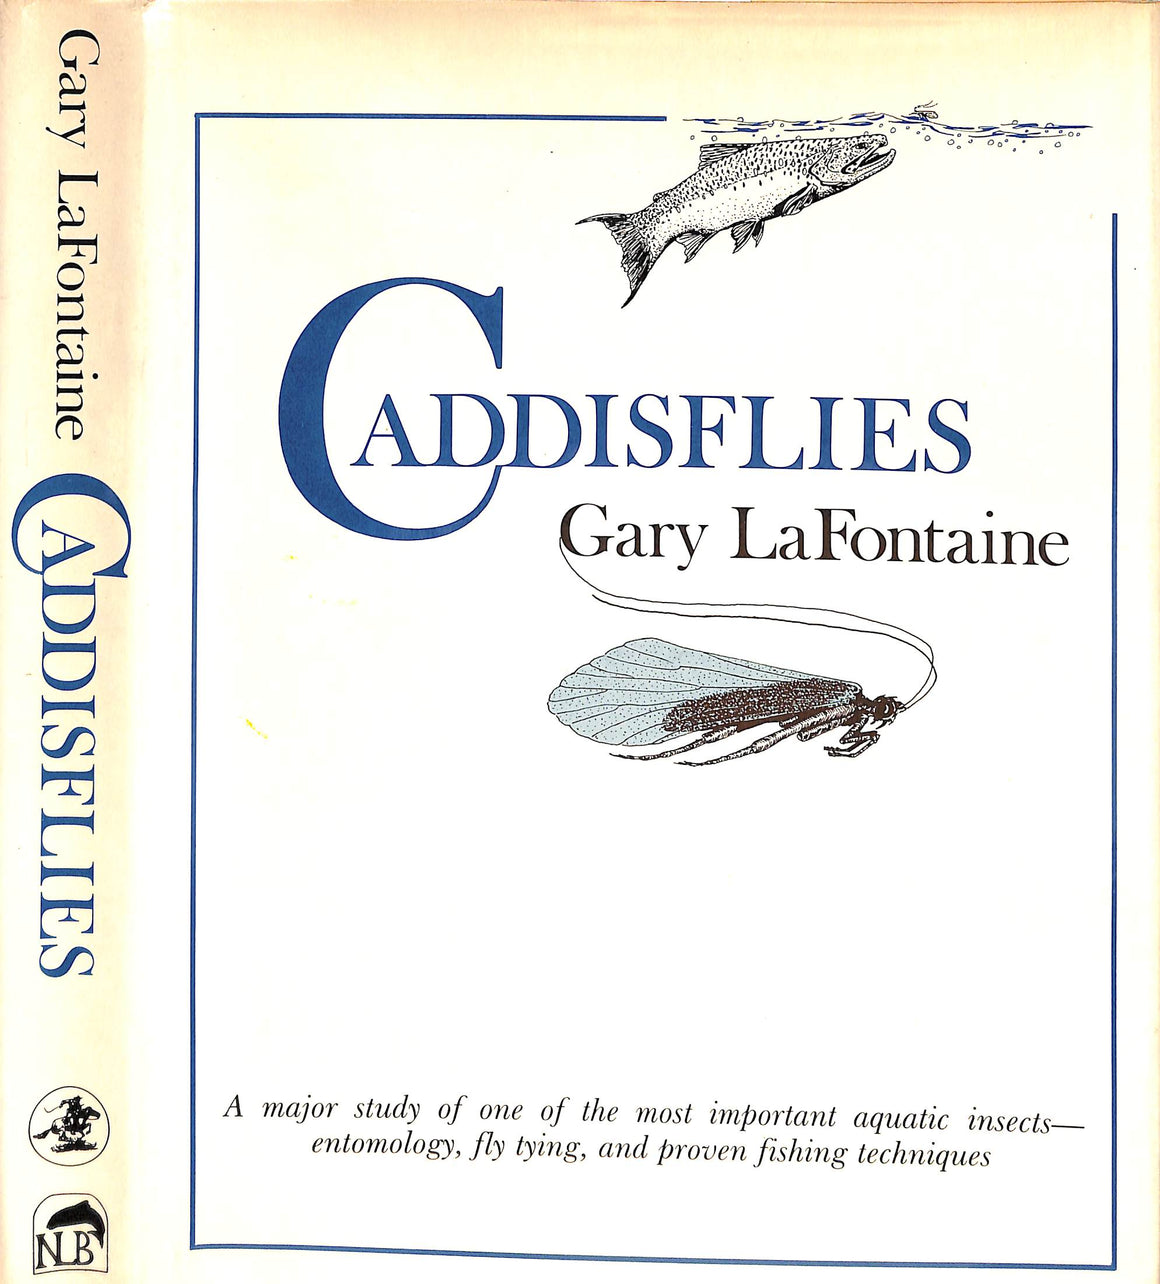 "Caddisflies" 1981 LAFONTAINE, Gary